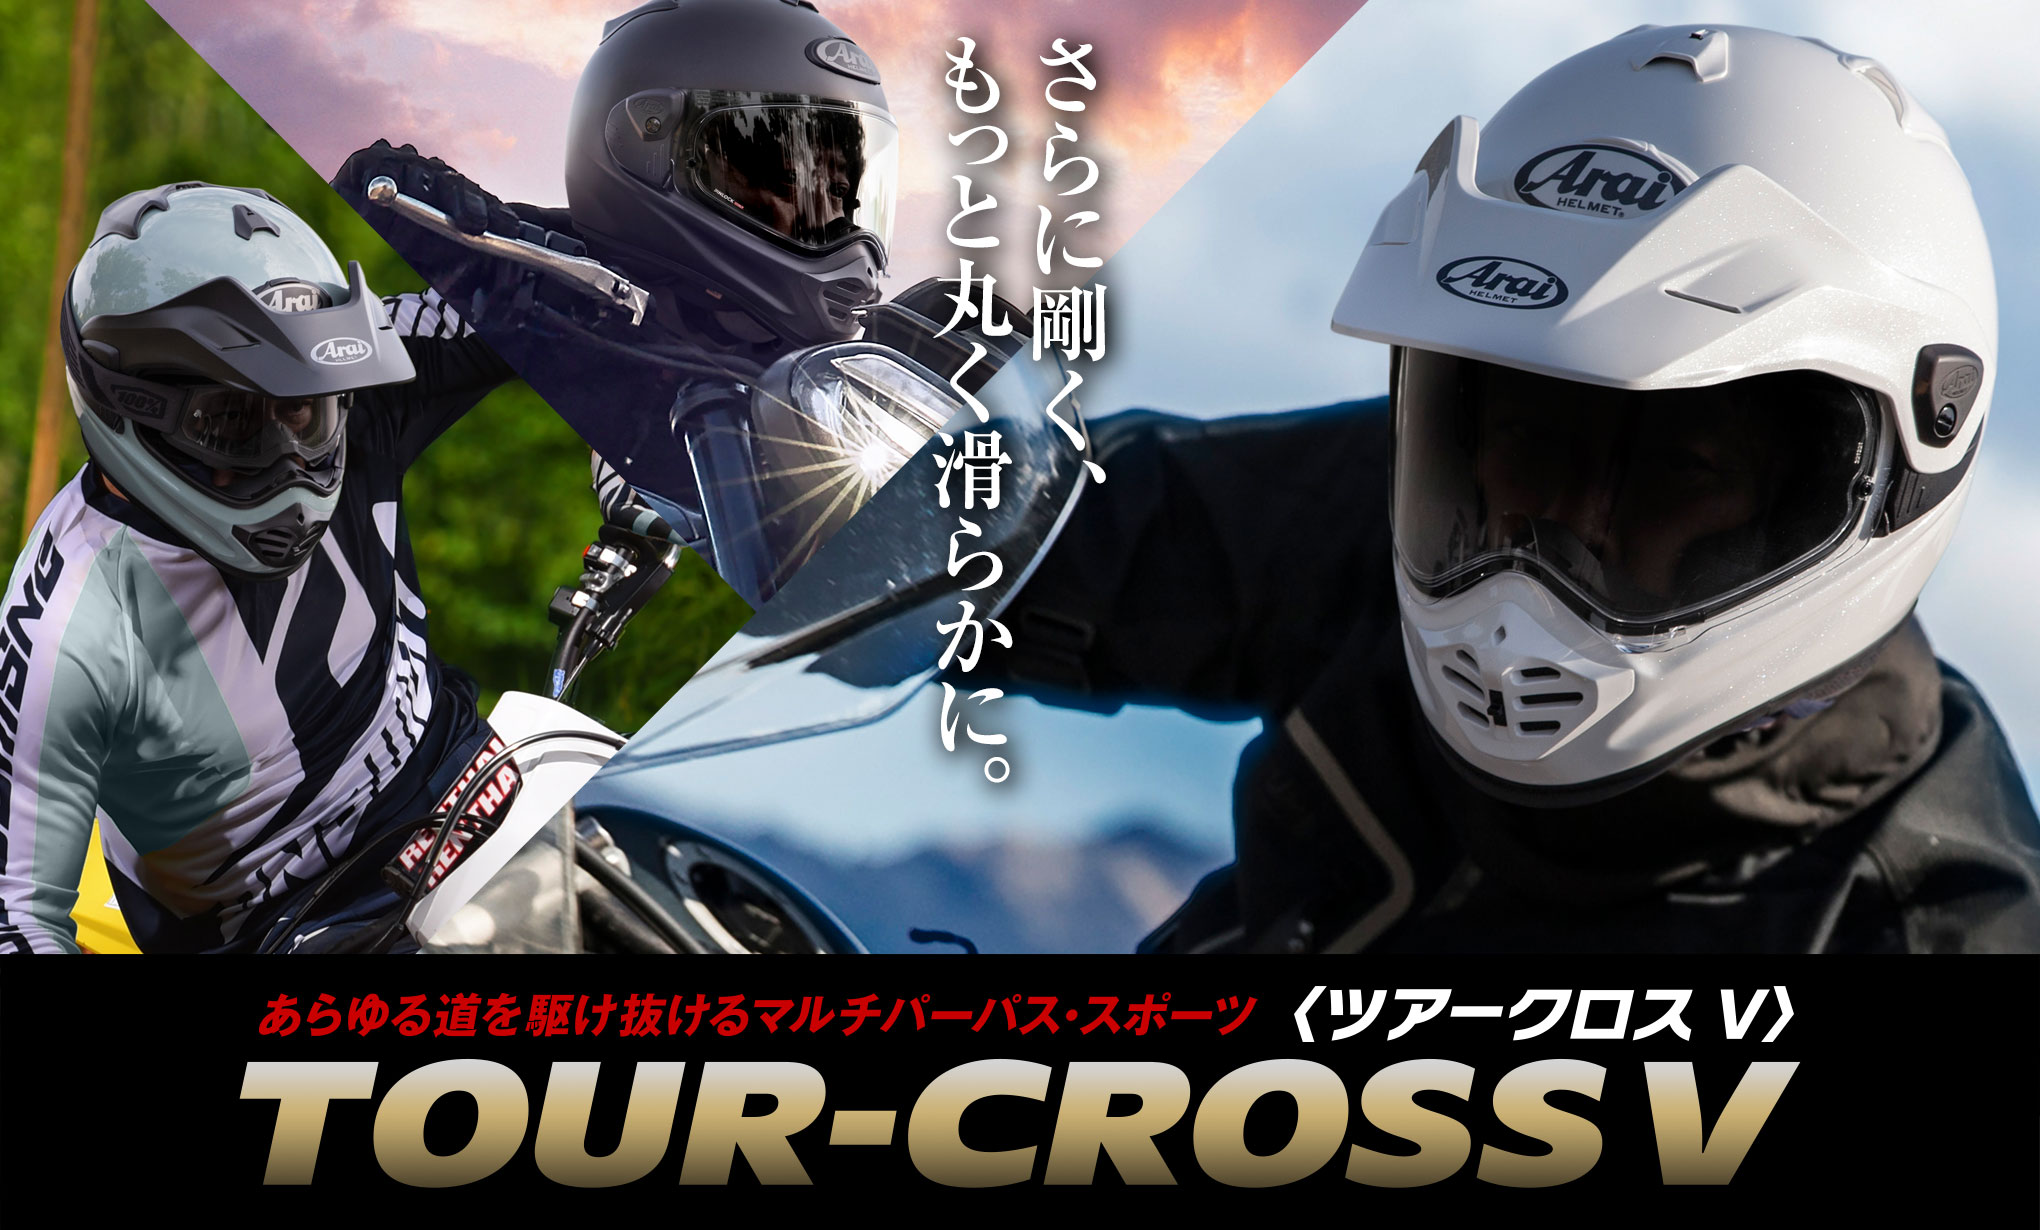 TOUR-CROSS V タイトル